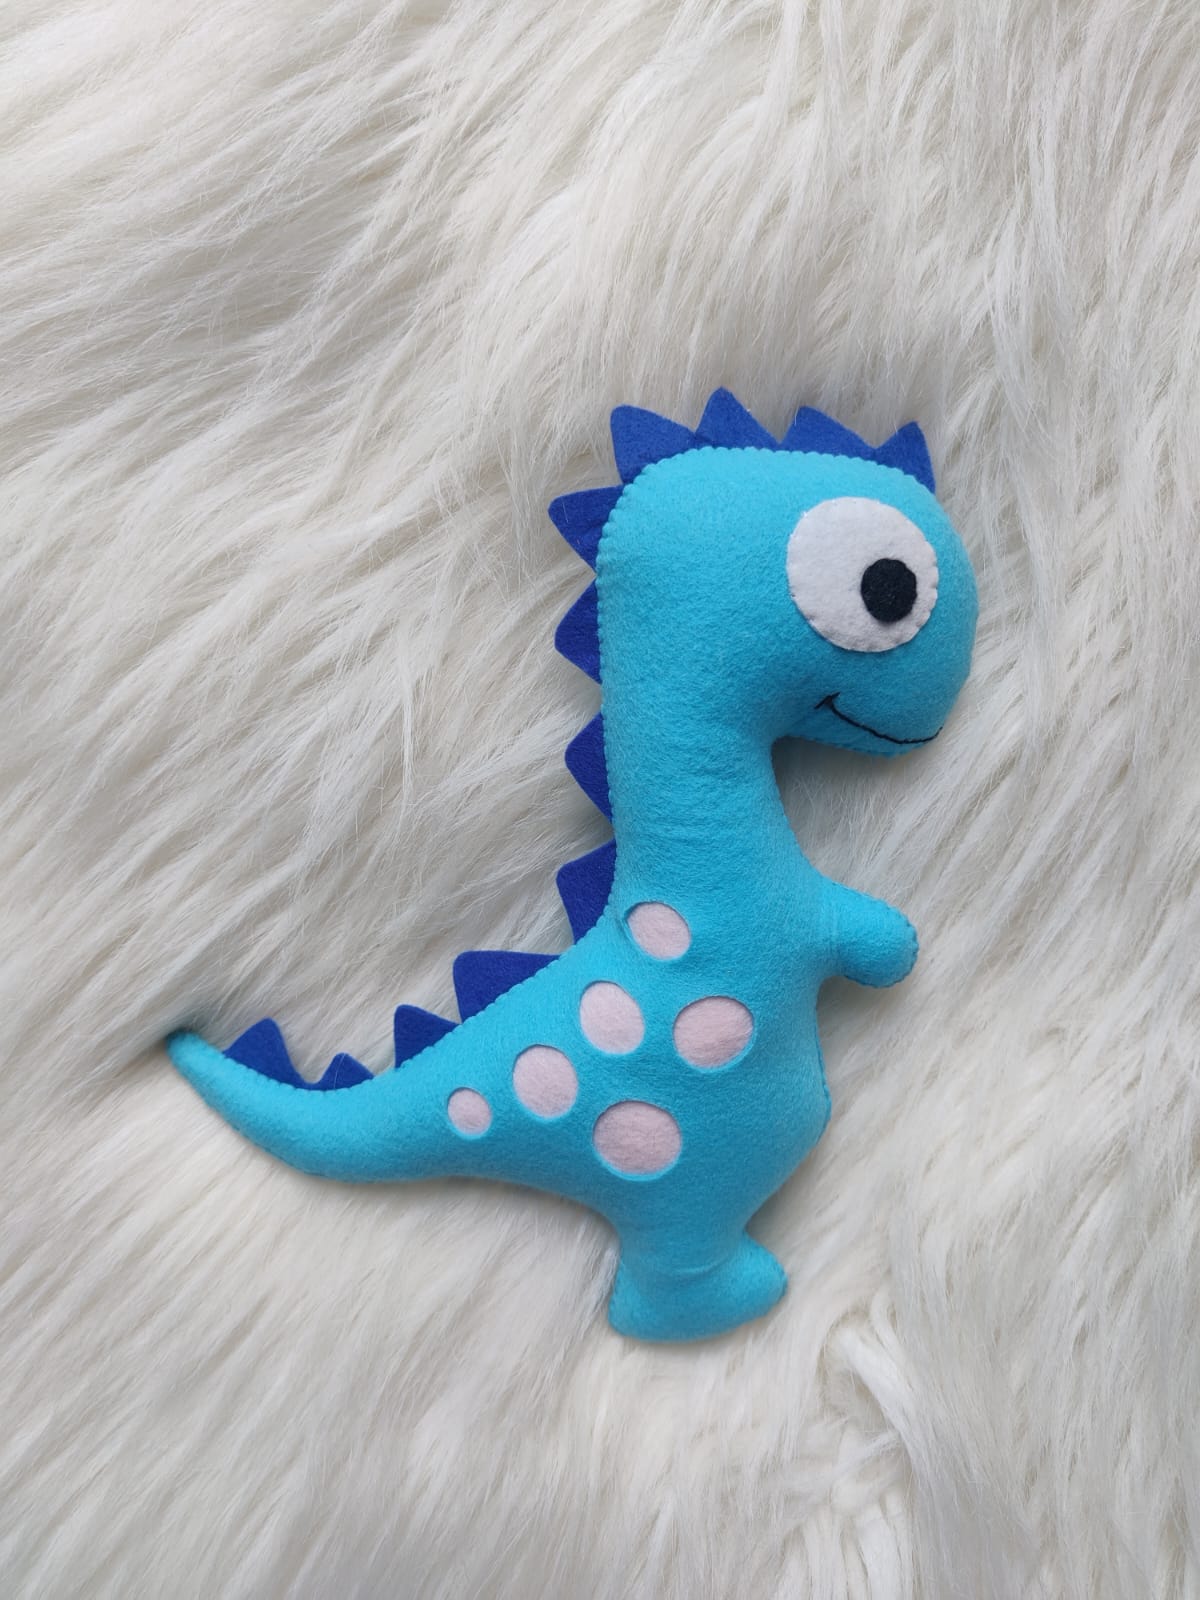 Cuddly Felt Dinosaur Soft Plush Toys